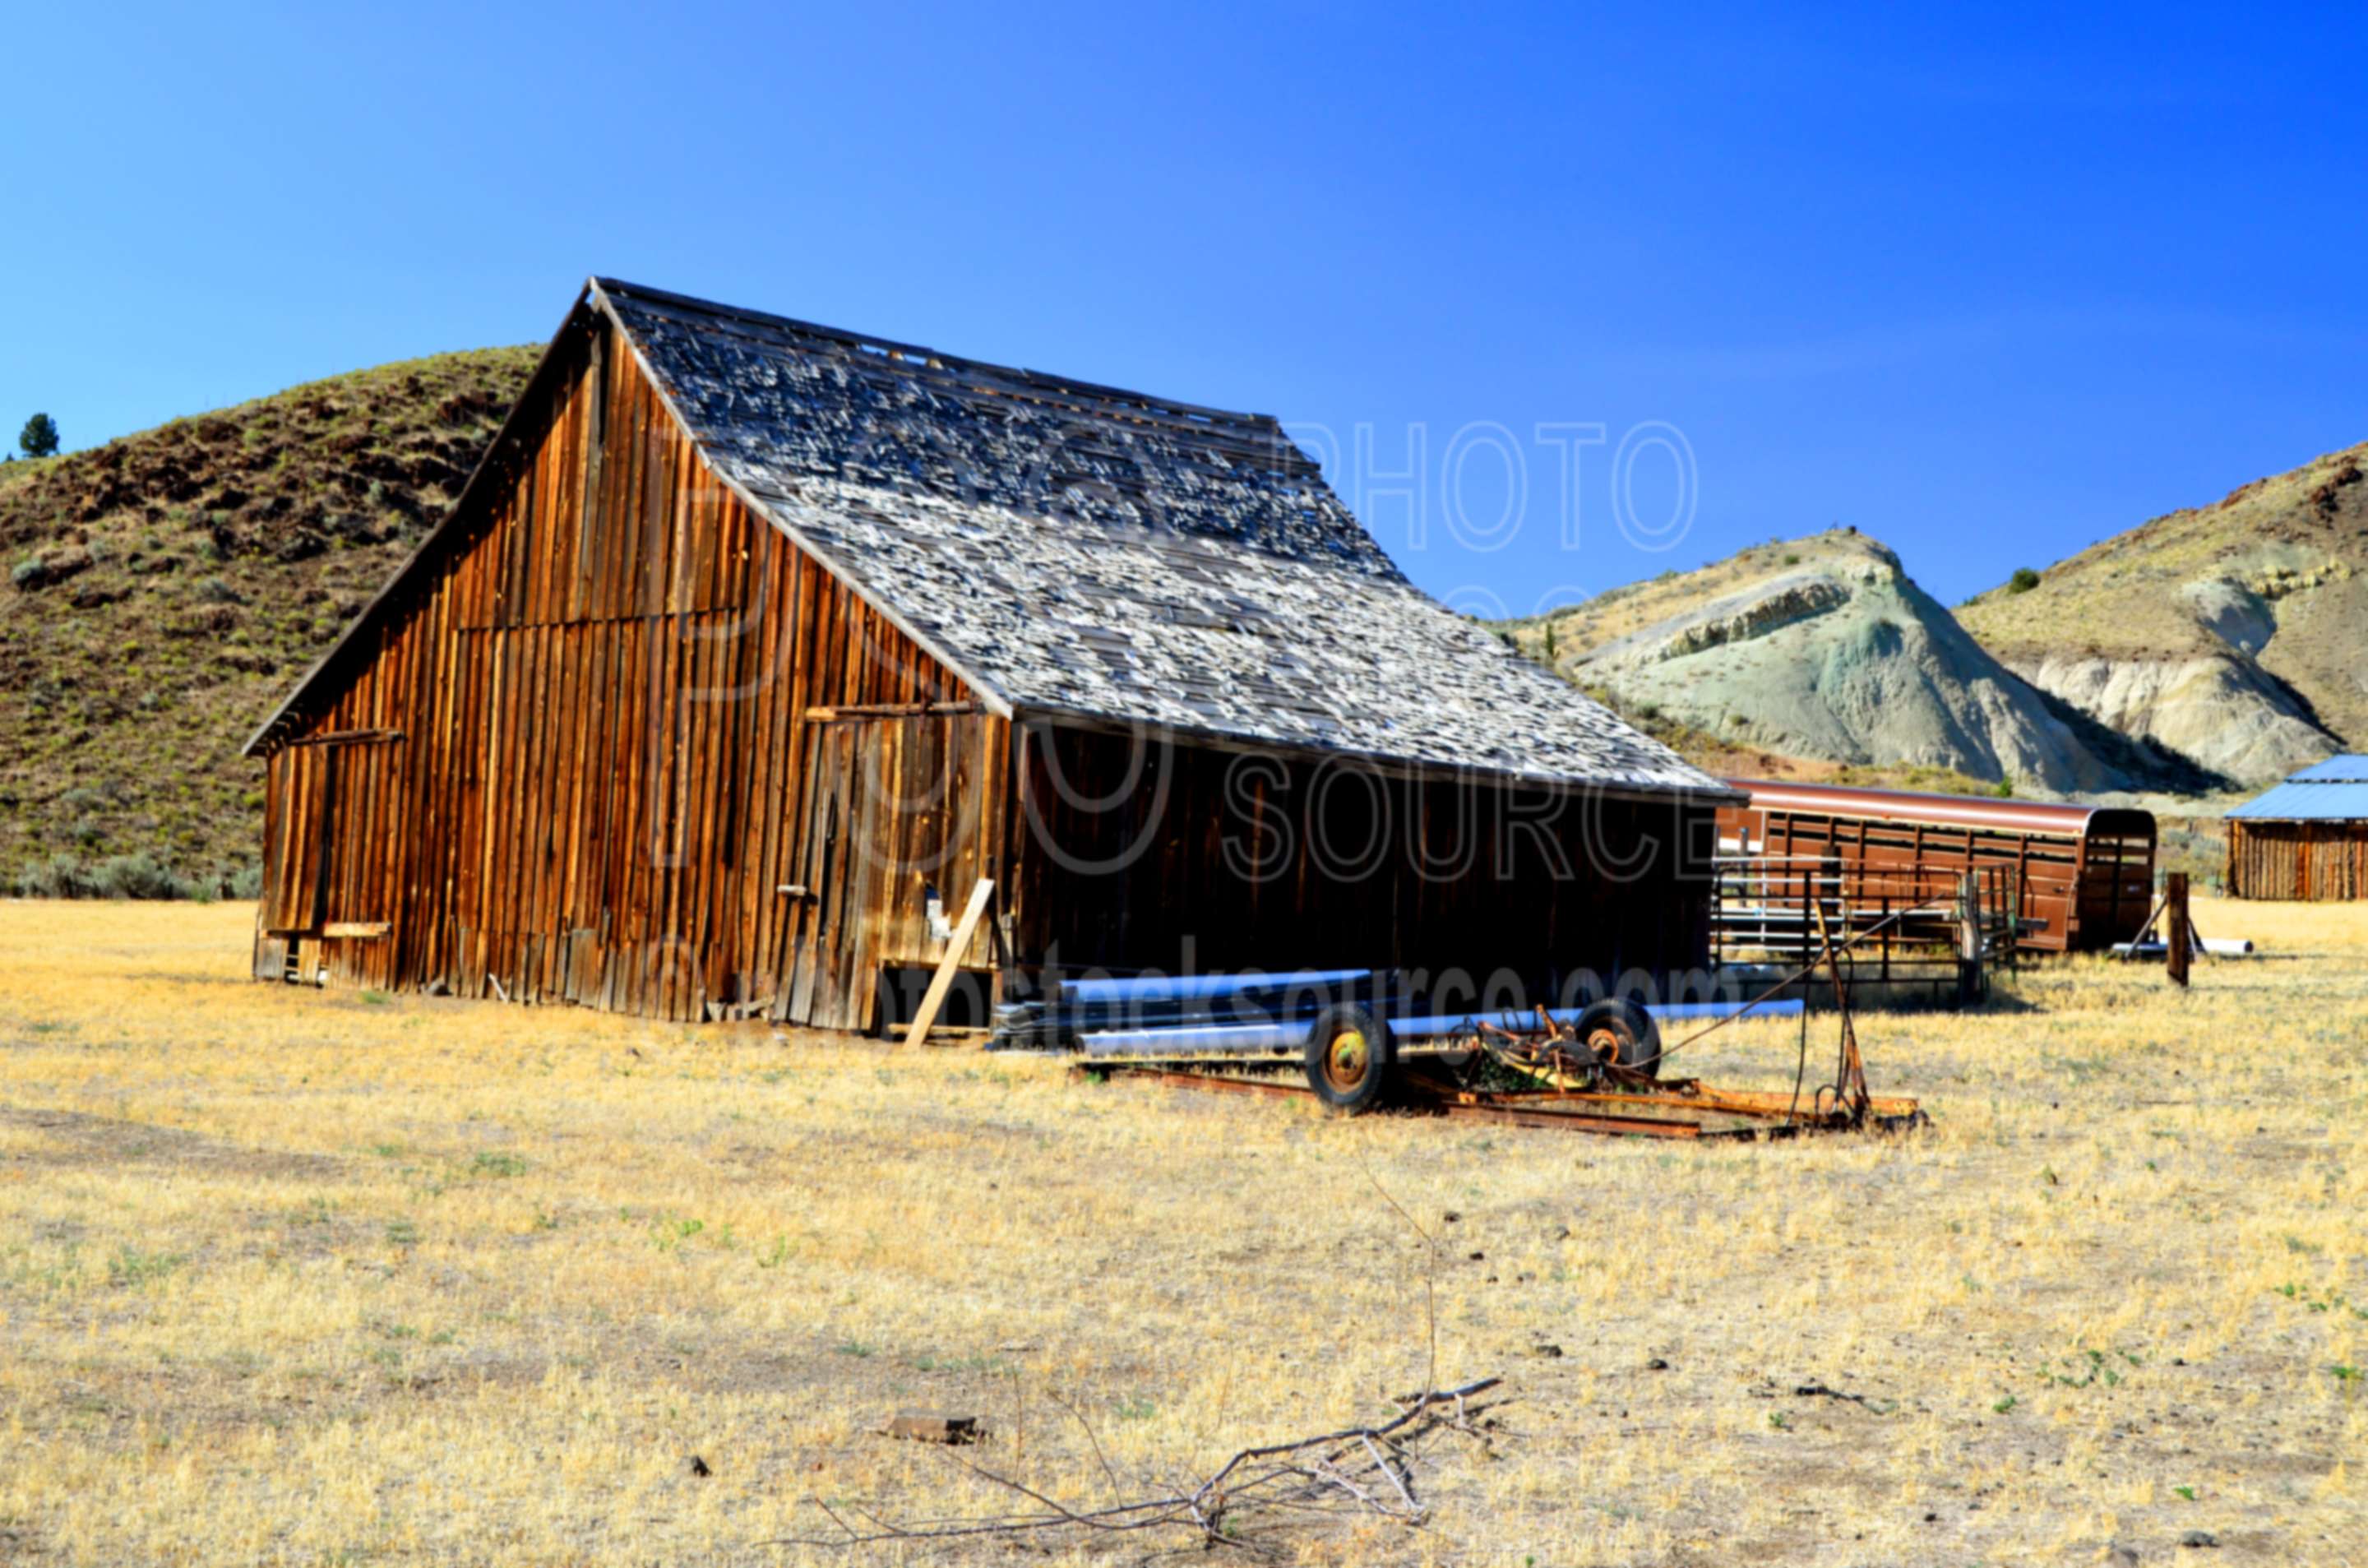 Wooden Barn,barn,rural,sagebrush,fence,wooden